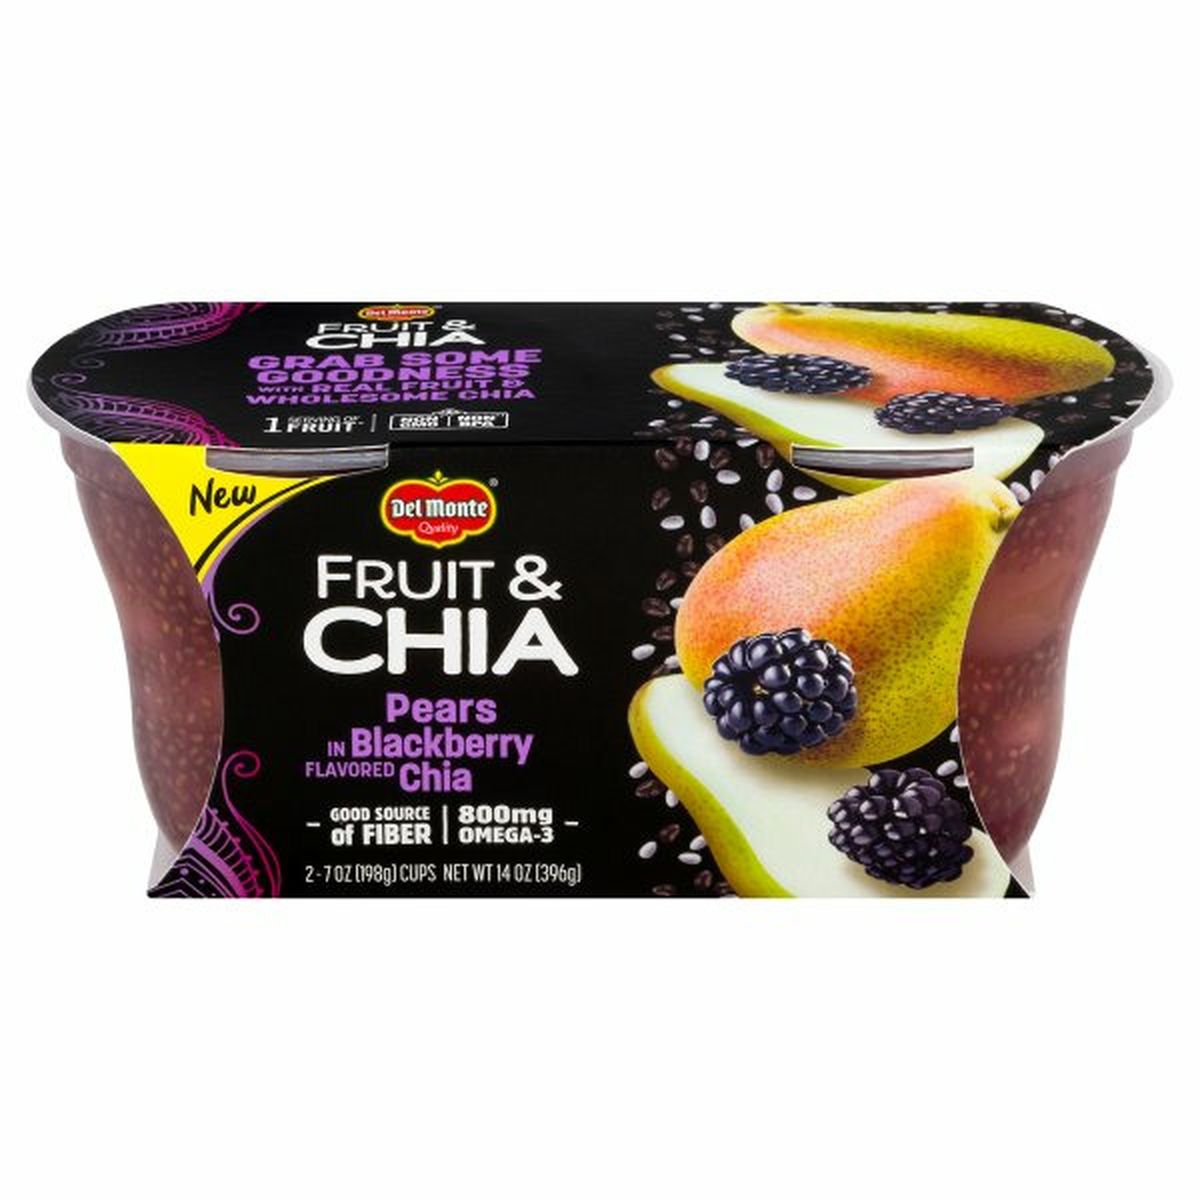 Calories in Del Monte Fruit & Chia Pears in Blackberry Flavored Chia